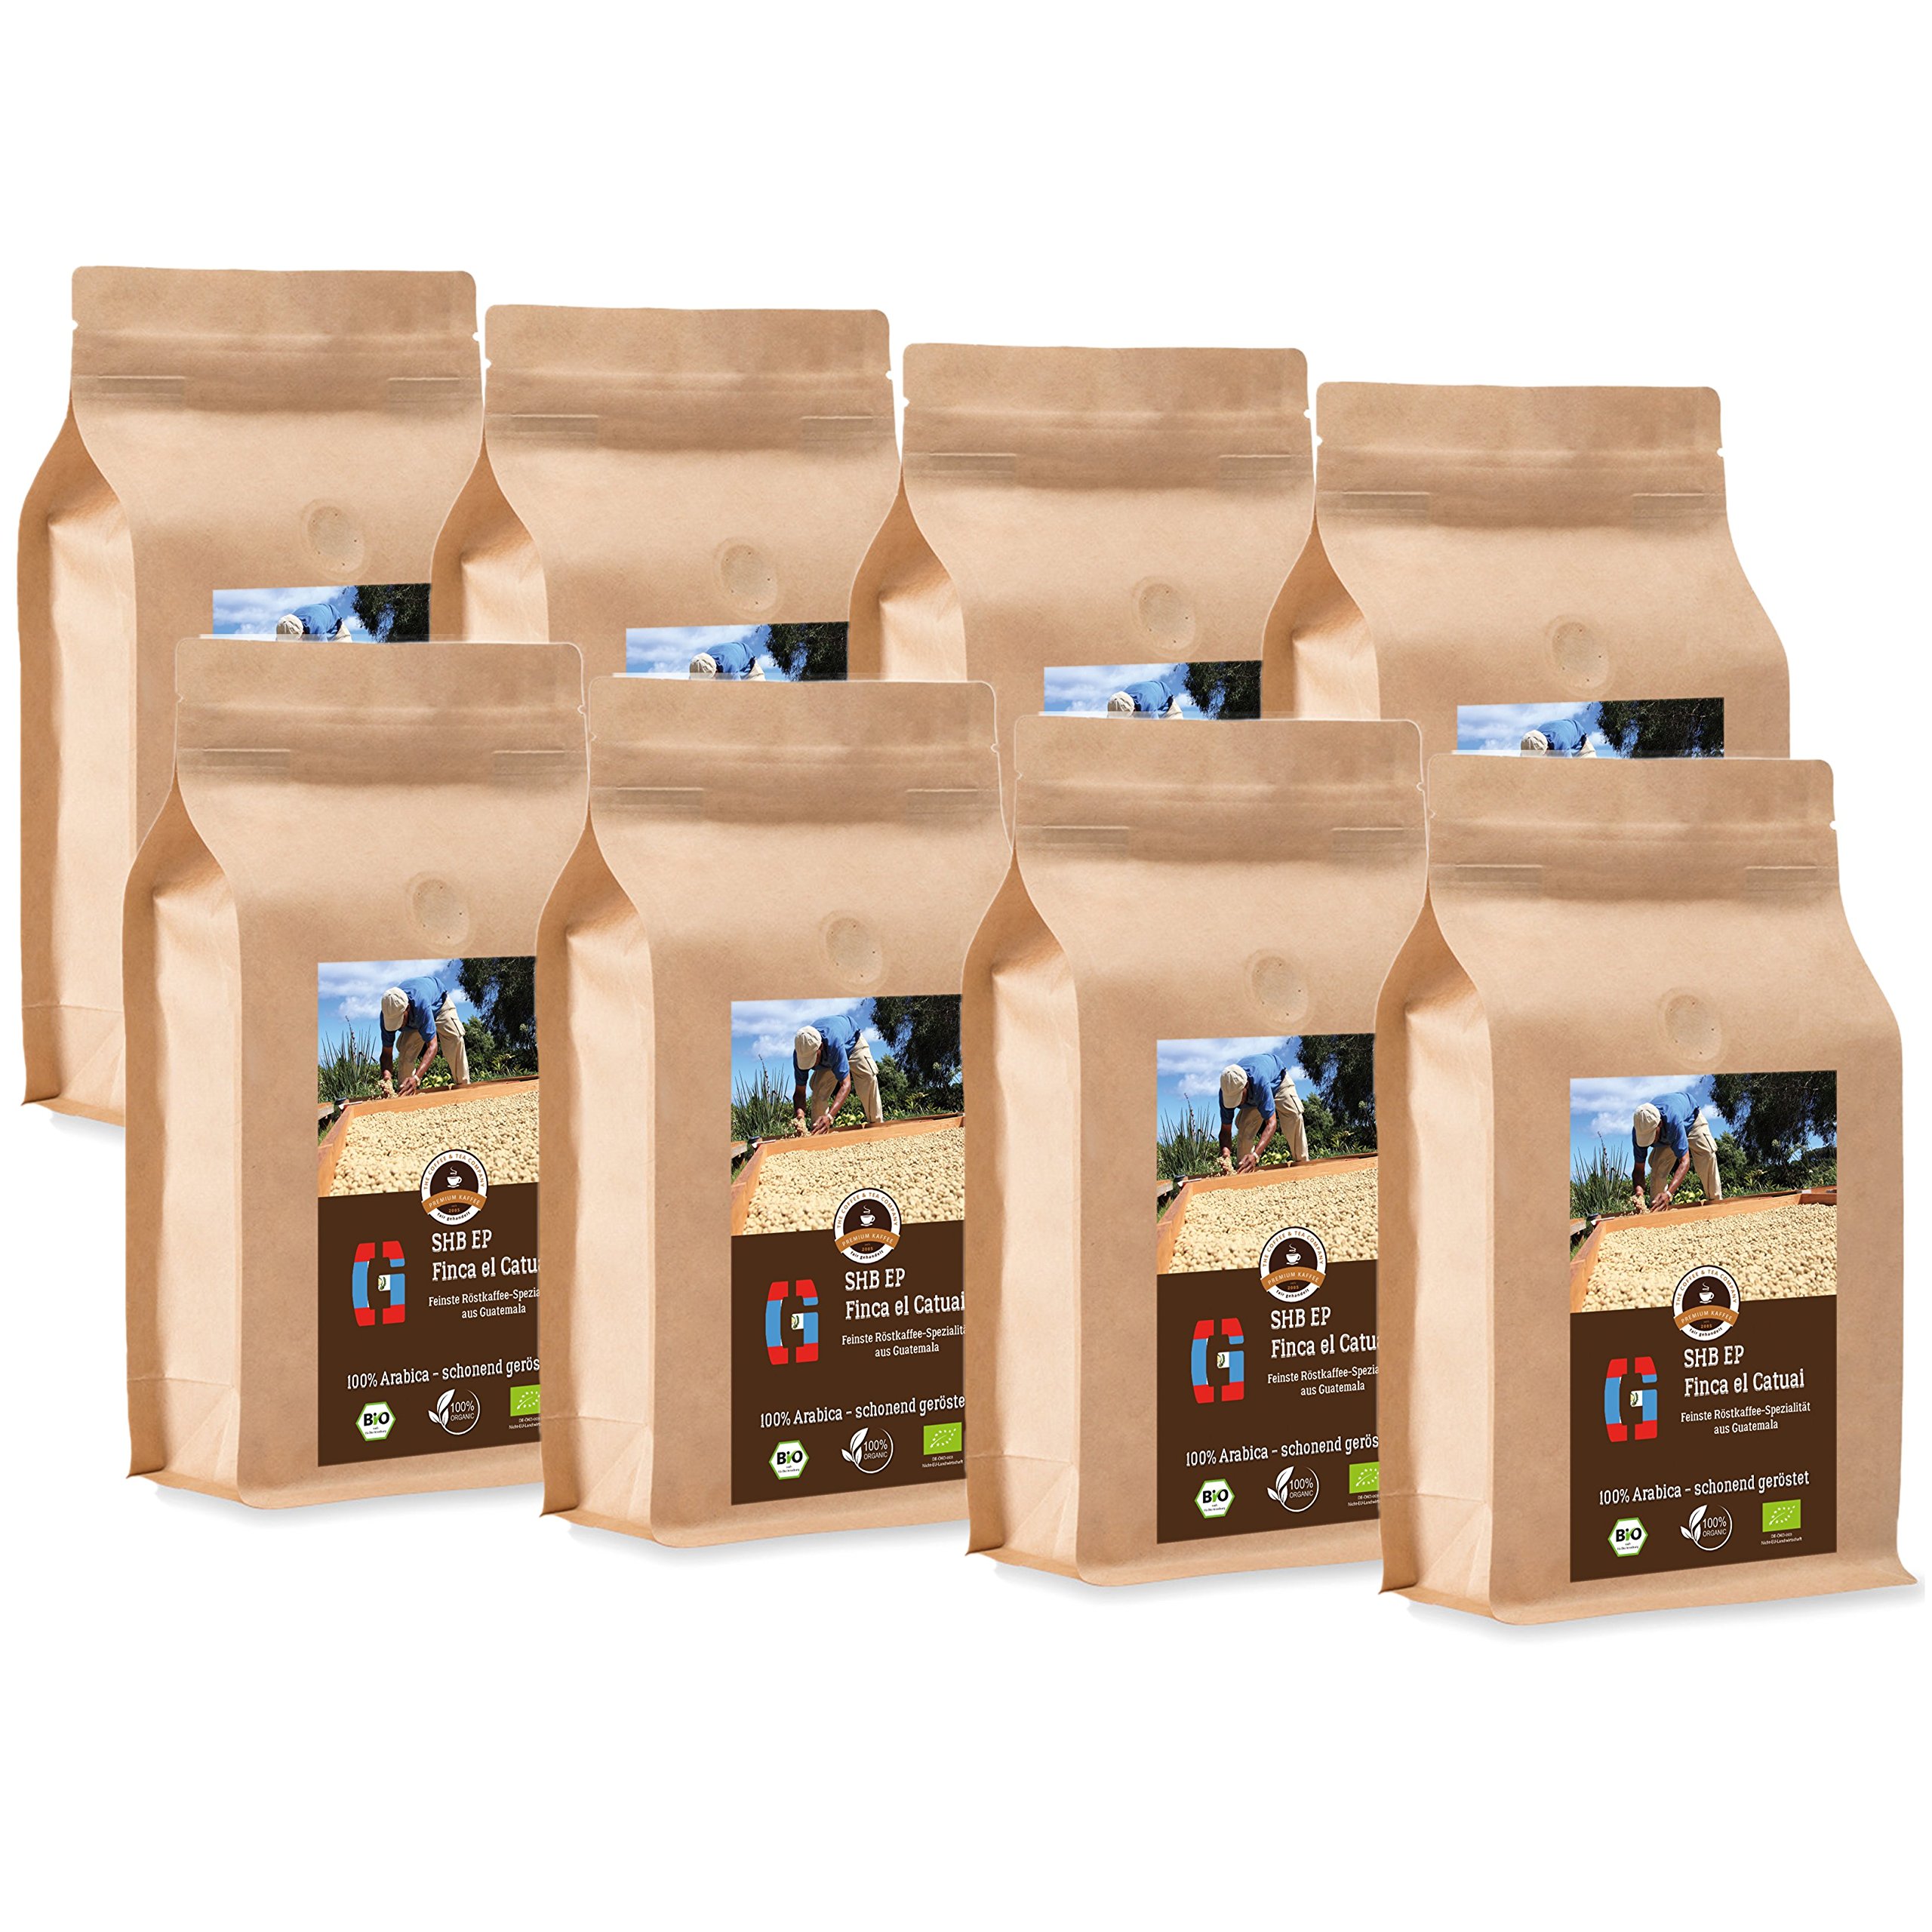 Kaffee Globetrotter - Bio Guatemala SHB EP Finca El Catuai - 8 x 1000 g Ganze Bohne - für Kaffee-Vollautomat, Kaffeemühle - Röstkaffee aus biologischem Anbau | Gastropack Sparpack